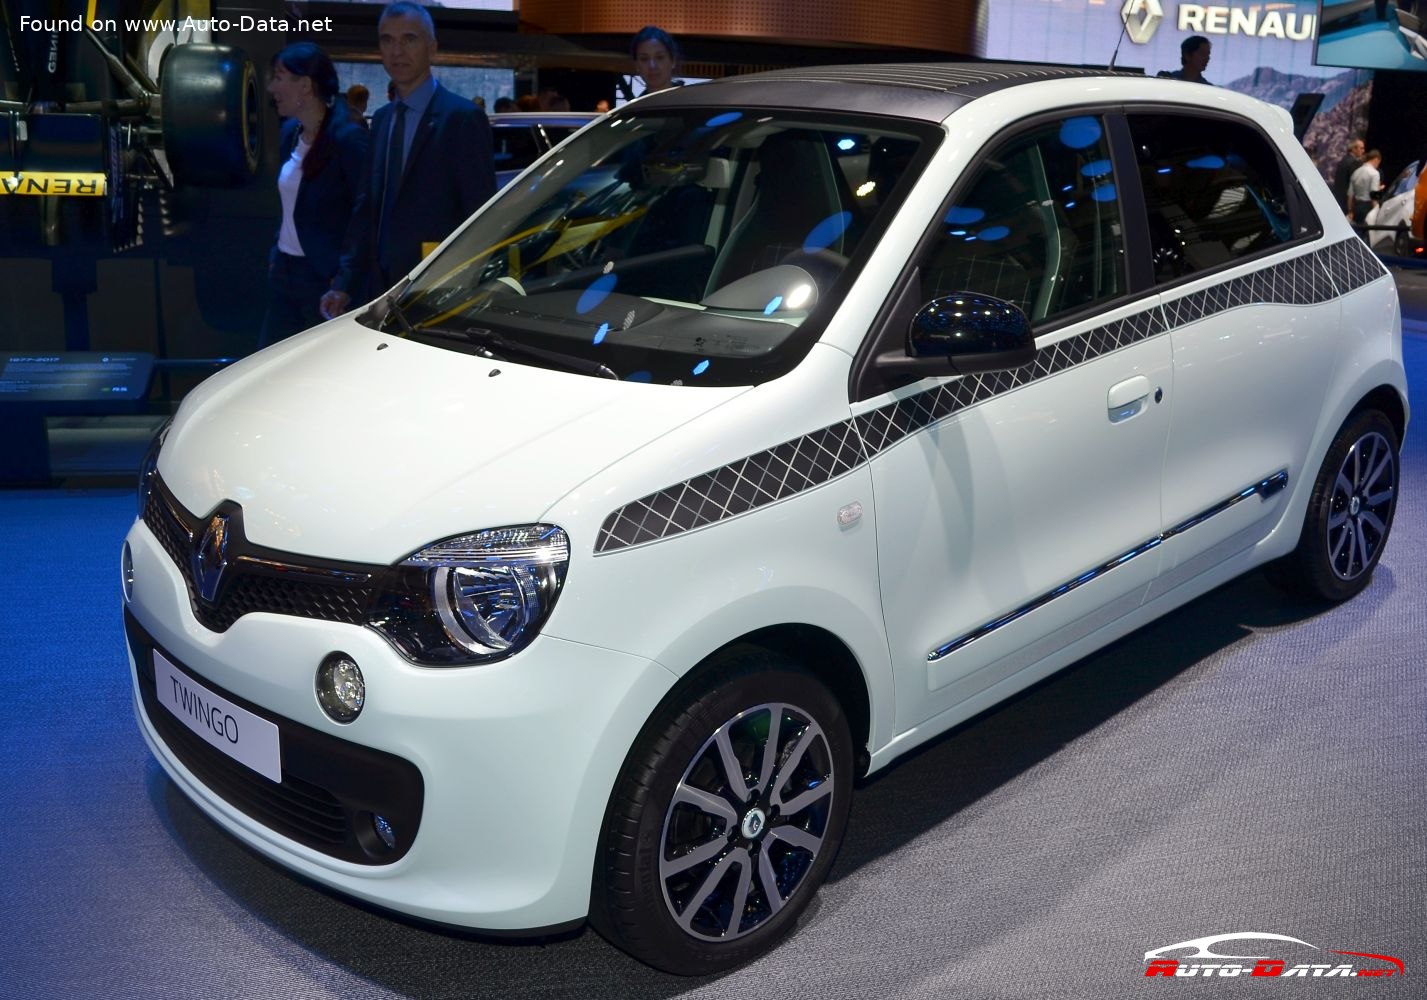 Renault Twingo 0.9 TCe - ახალი თამამი ხელი